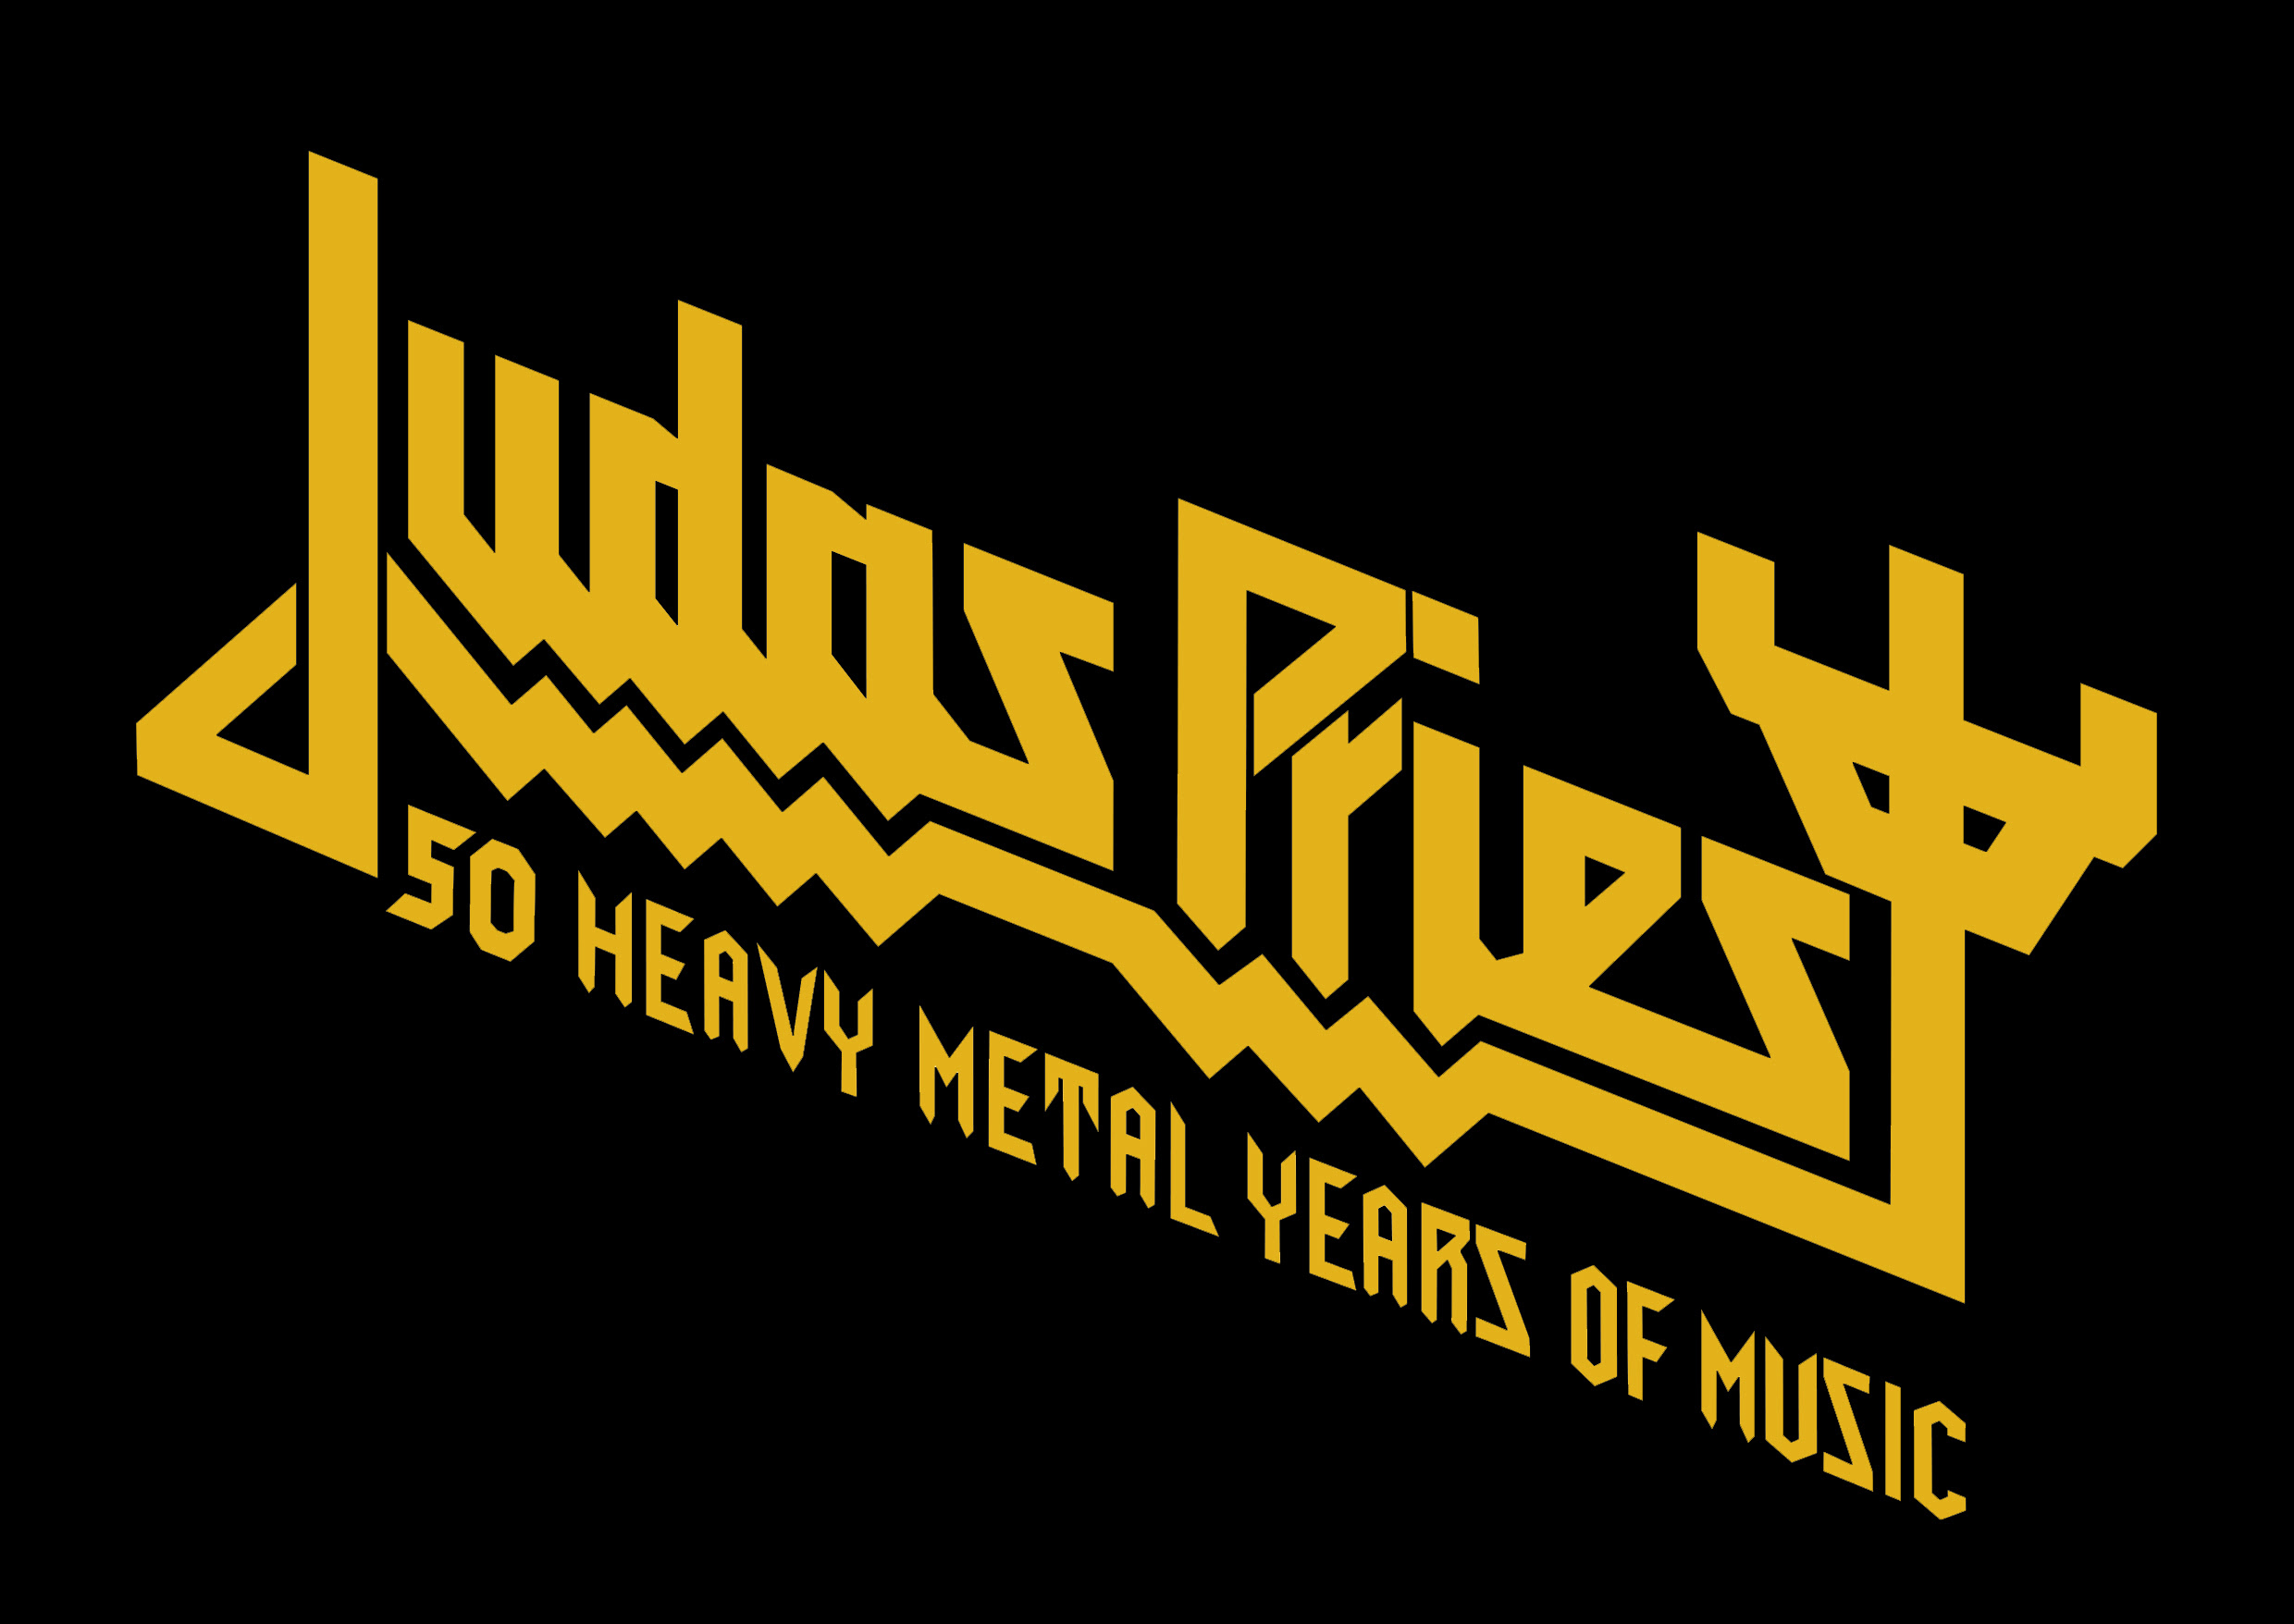 Judas Priest - Cd Reflections: 50 Heavy Metal Years Of Music